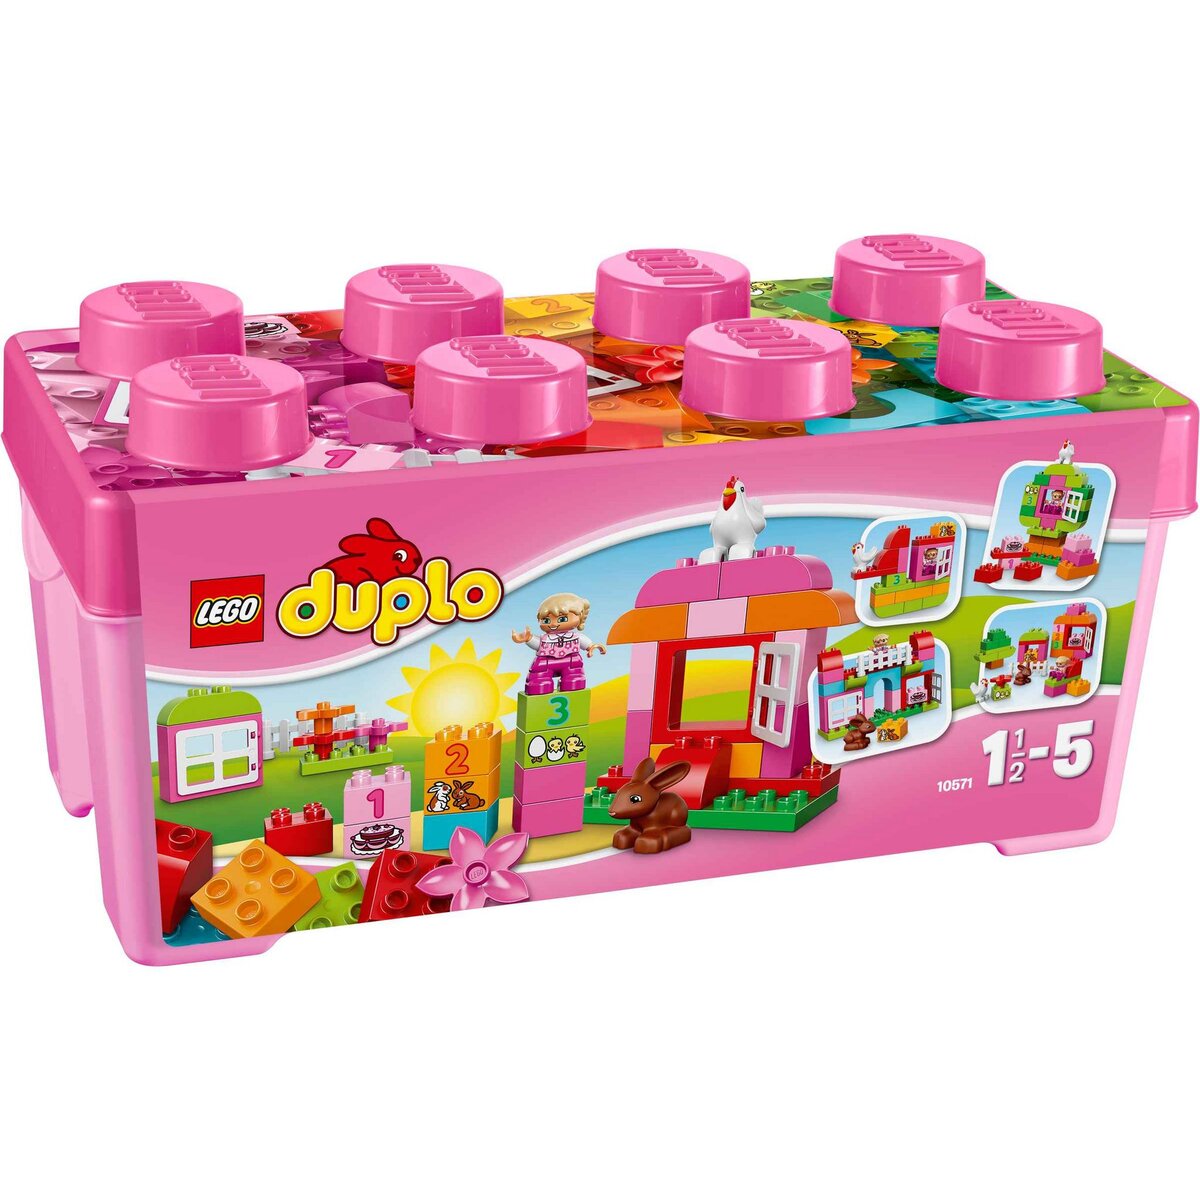 LEGO Duplo Creative Play 10571 - Grande boite mon jardin merveilleux